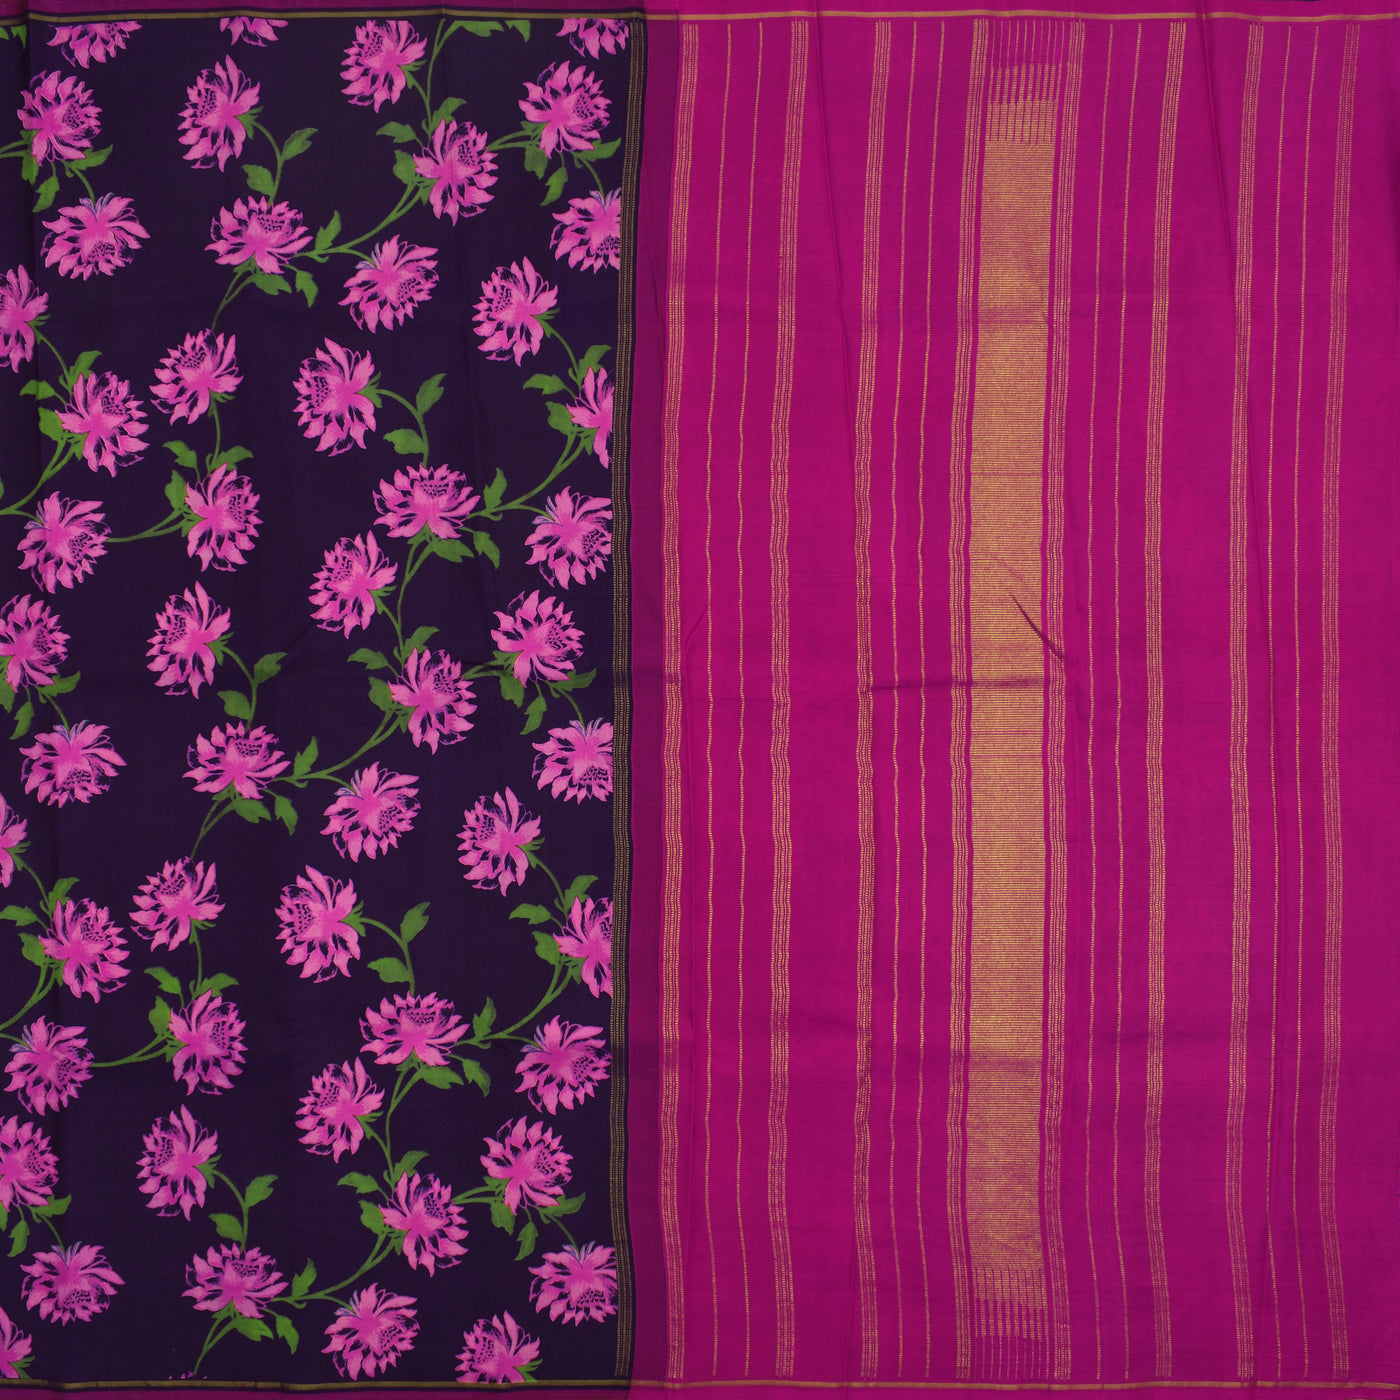 Violet Printed Kanchipuram Silk Saree with Big Flower Printed Design